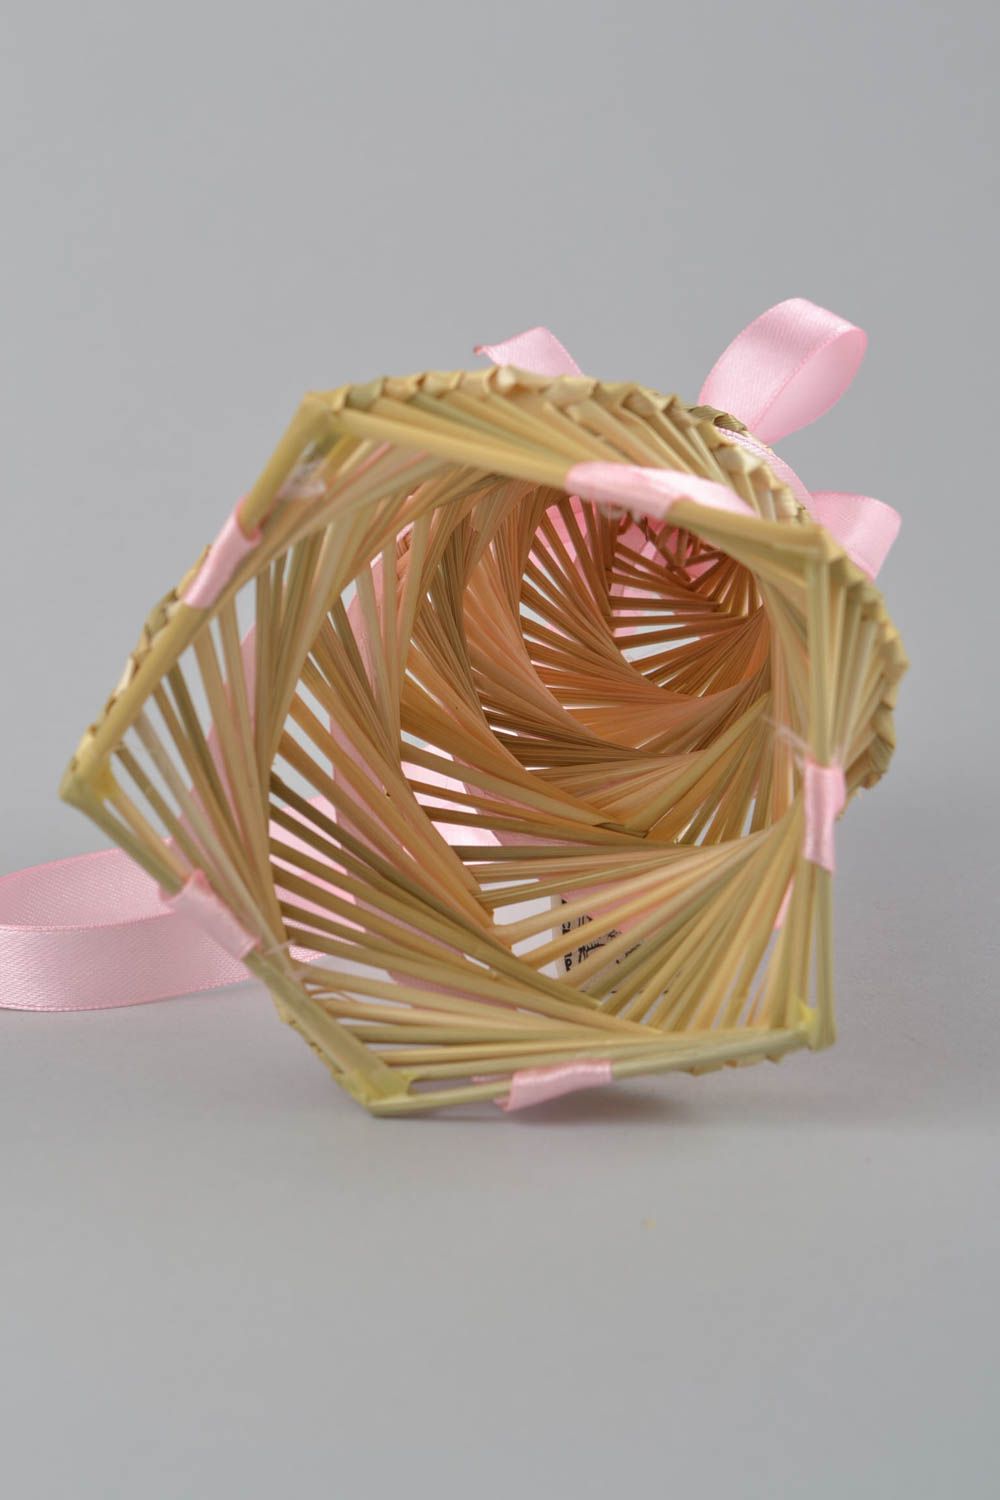 Handmade beautiful woven bell made of straw on satin ribbon photo 4